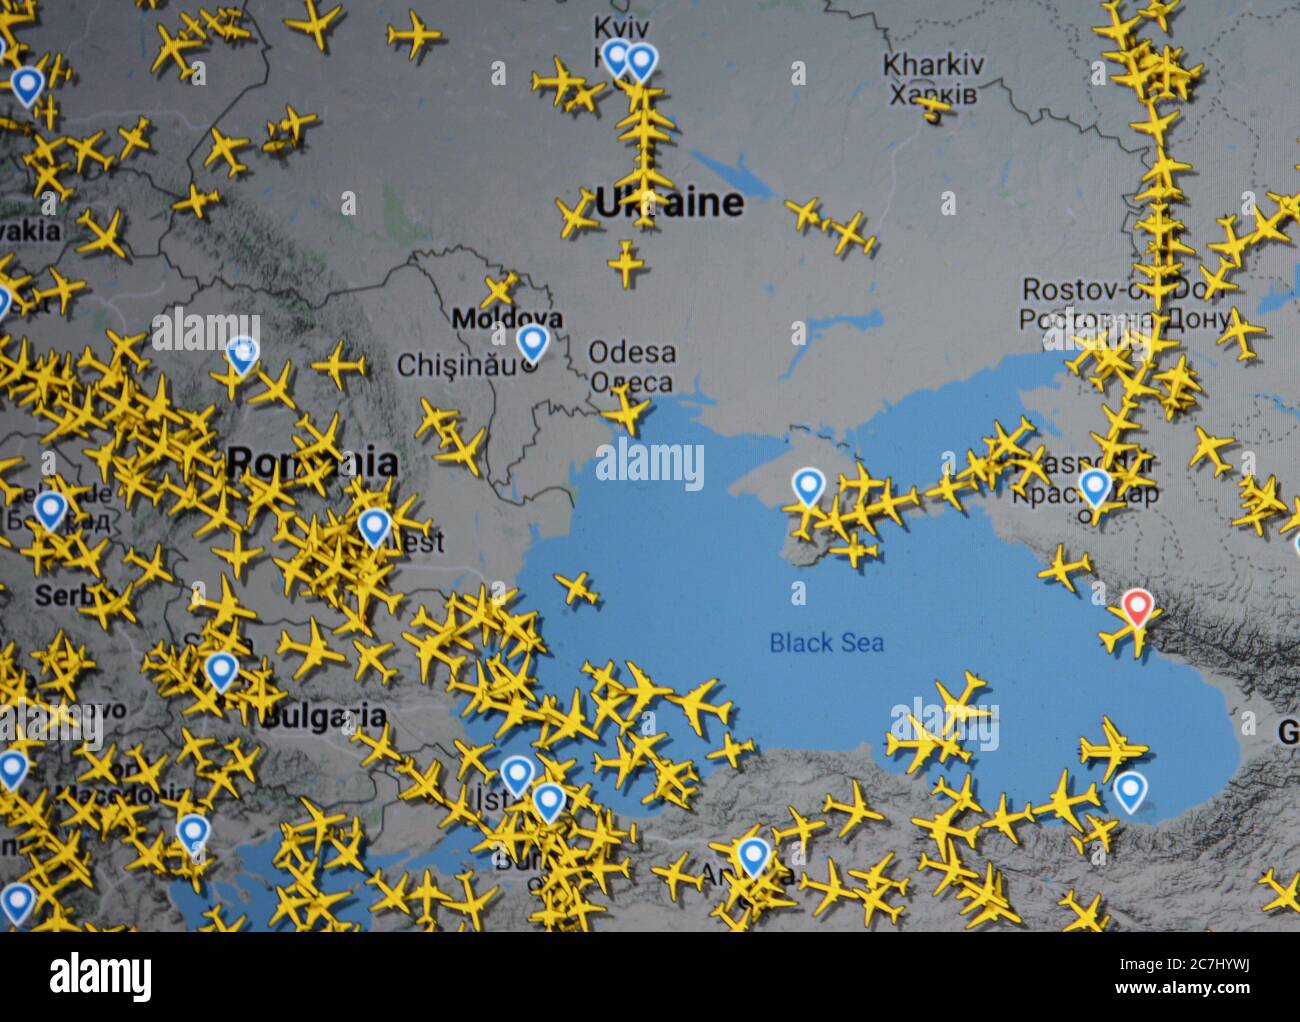 air traffic over Ukraine, Russia and Black sea (17 july 2020, UTC 14.59)   on Internet with Flightradar 24 site, during the Coronavirus Pandemic Stock Photo